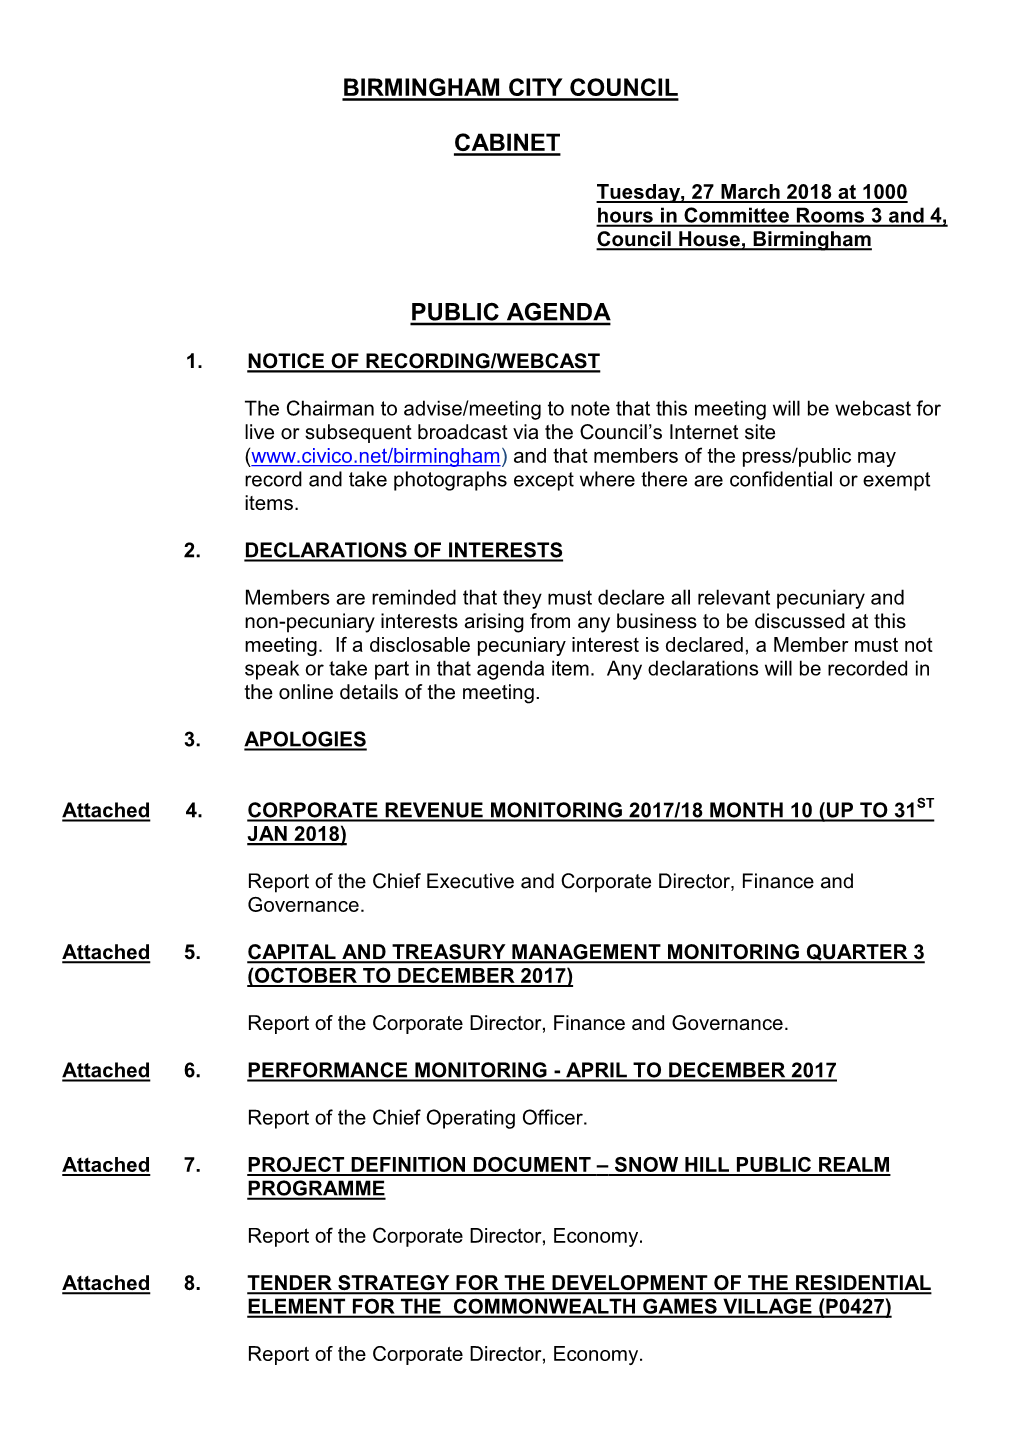 Birmingham City Council Cabinet Public Agenda